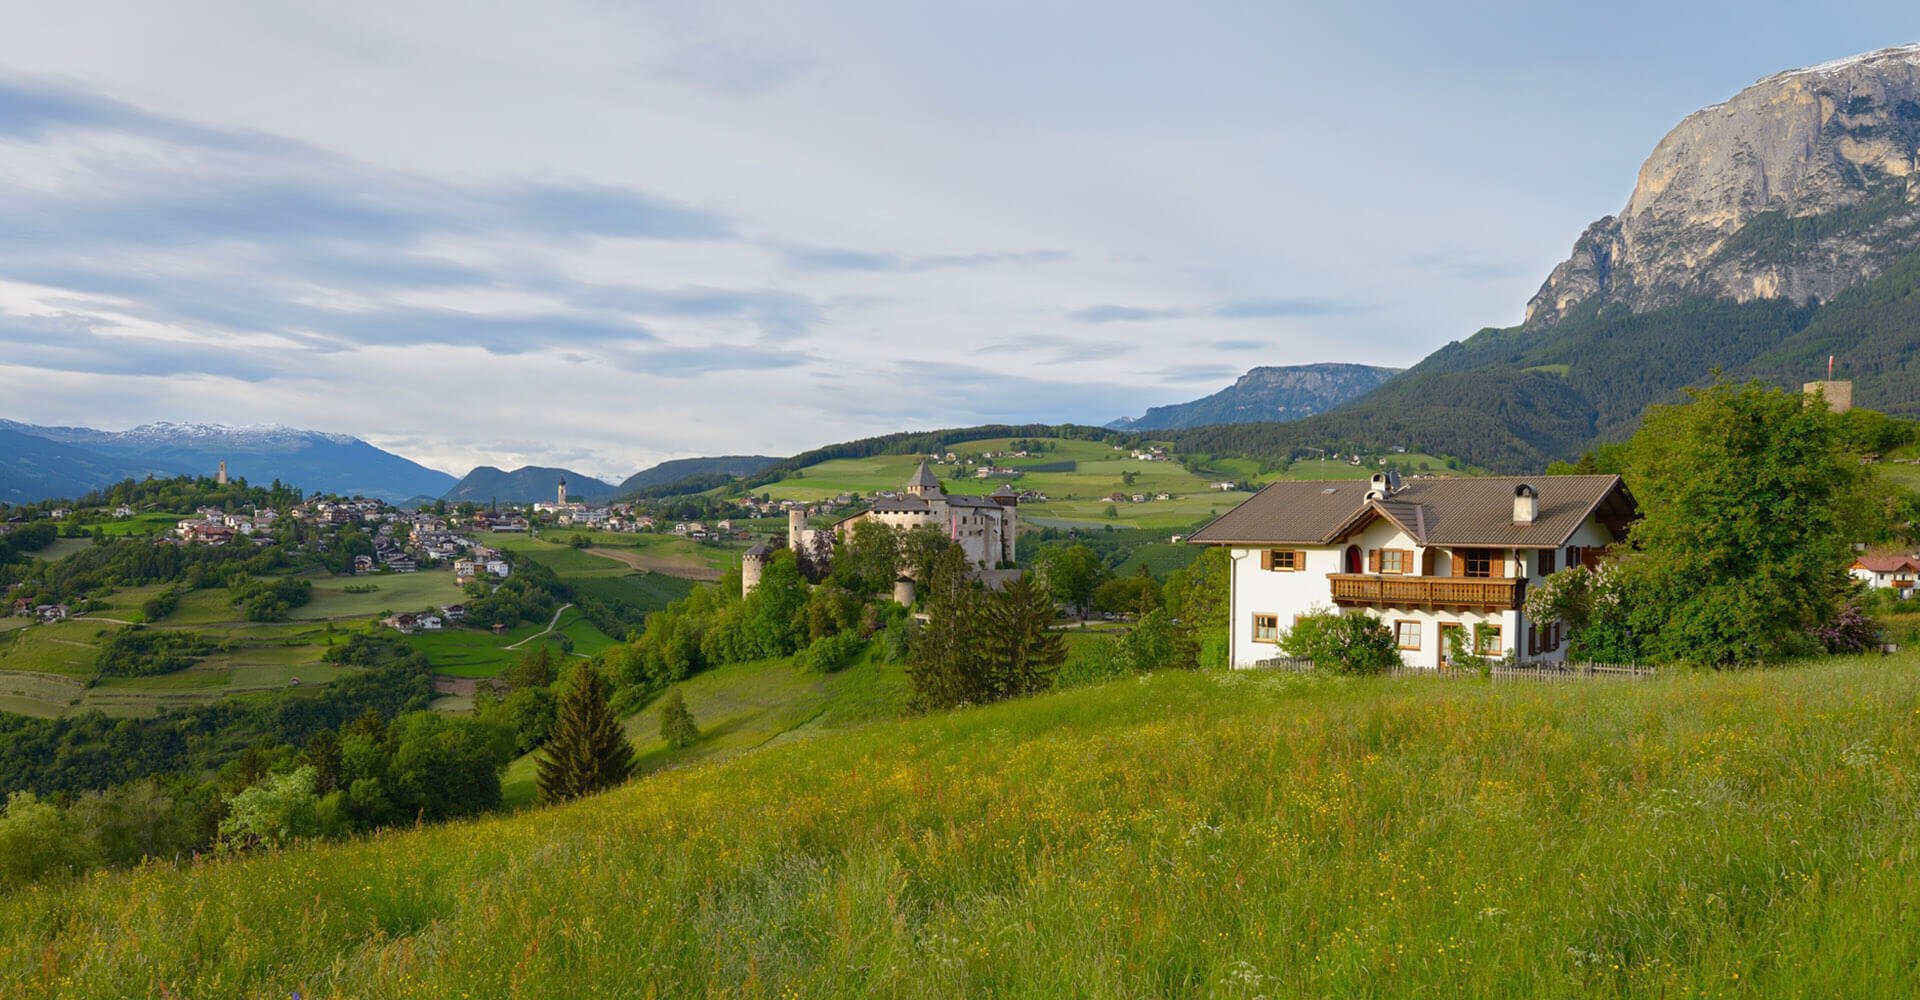 Schlosshof in Fie – break and stunning mountain scenery